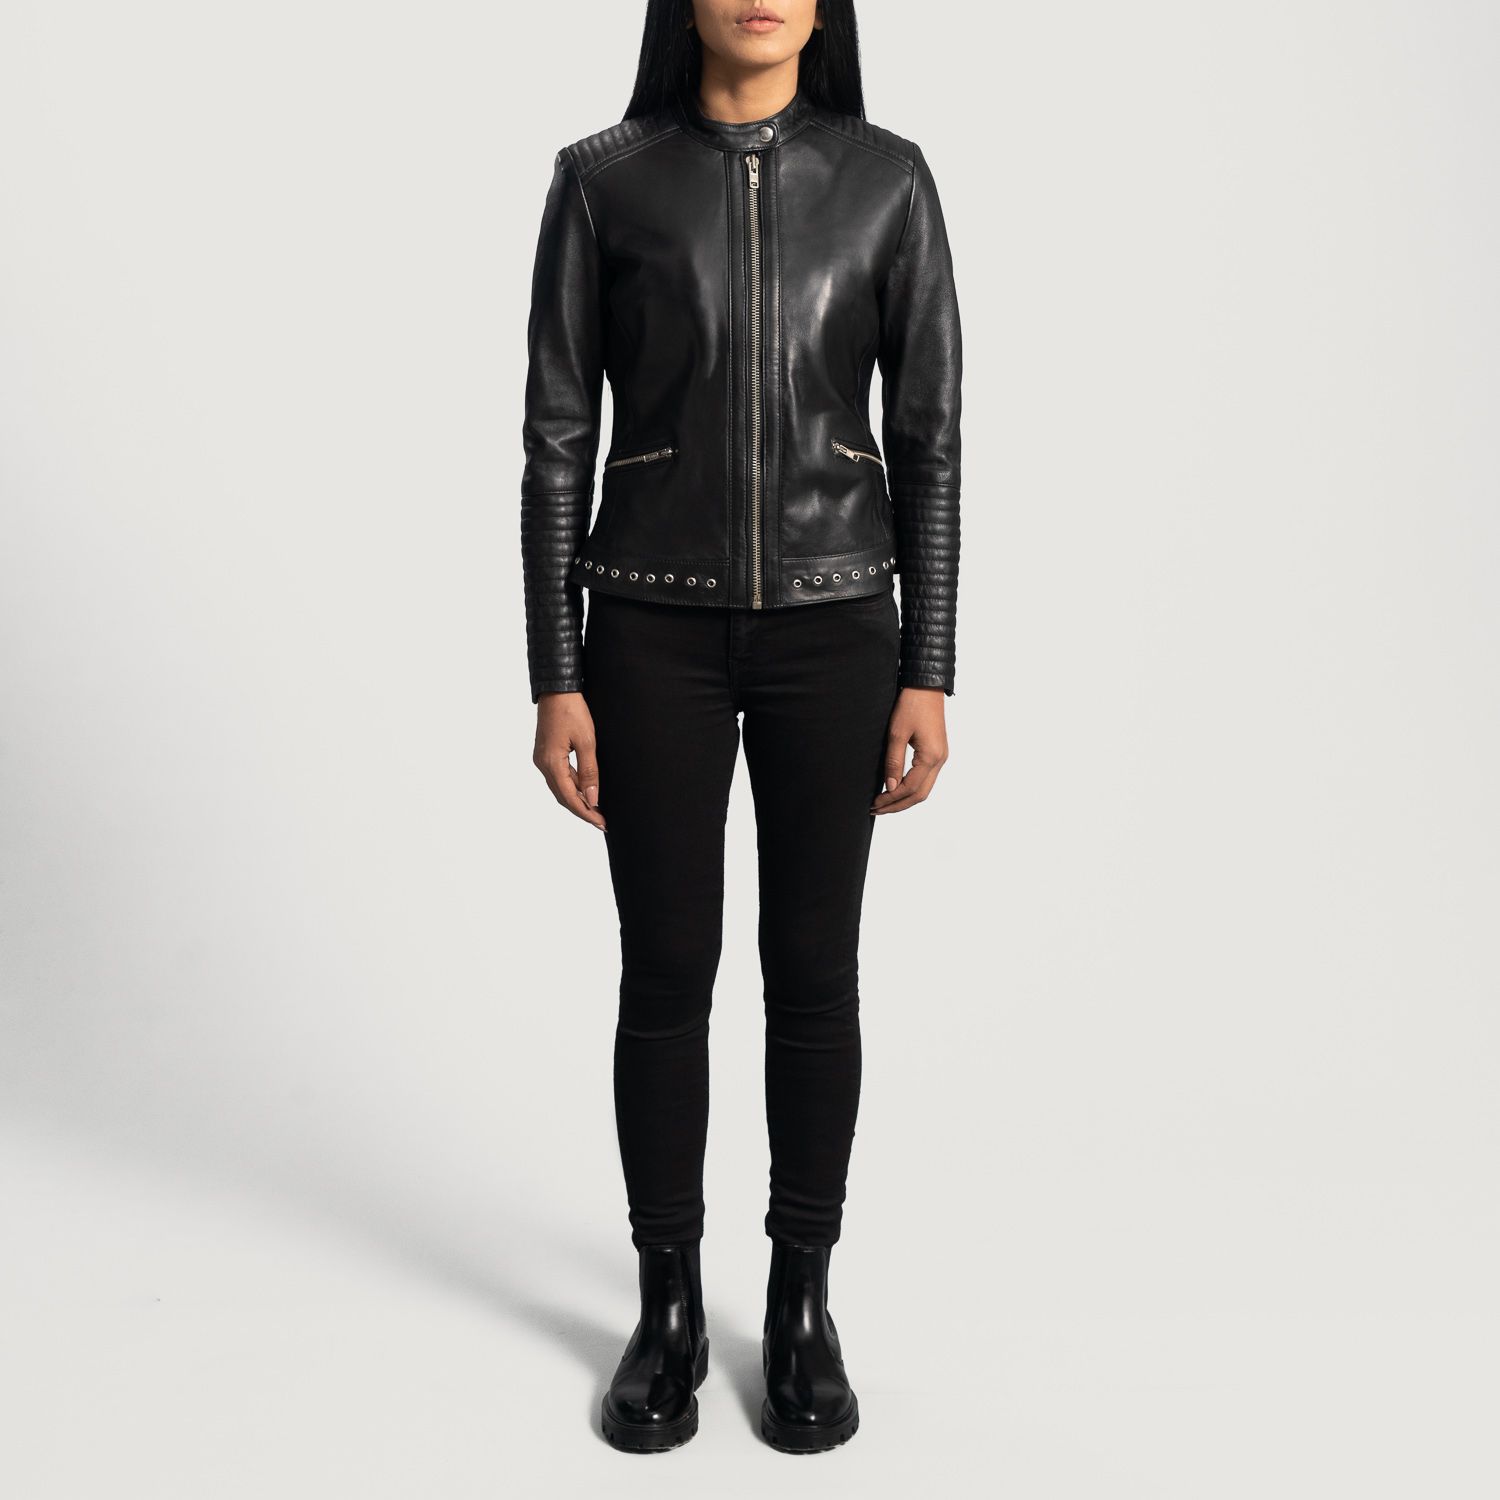 Haley Ray Black Leather Biker Jacket | The Jacket Maker